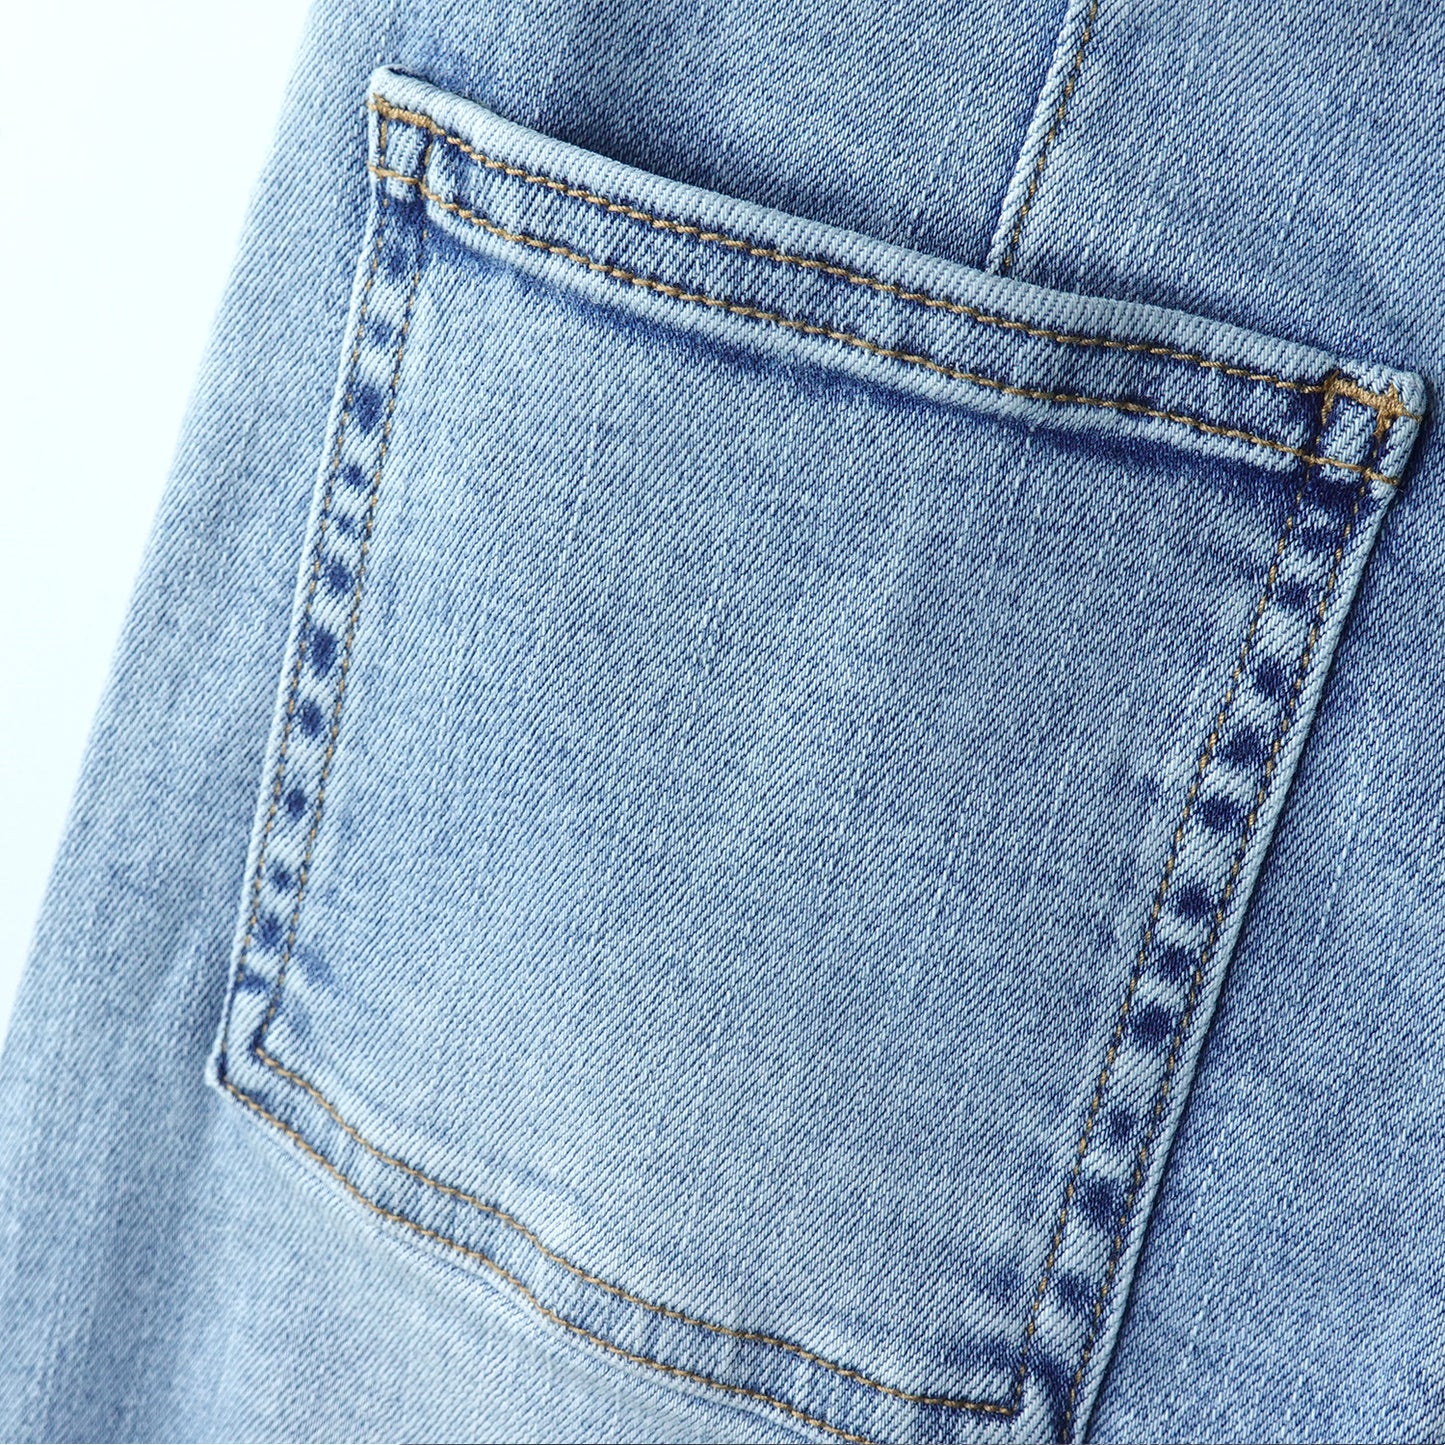 Boys Jeans Children Ripped Soft Stretchy Classic Denim Pants